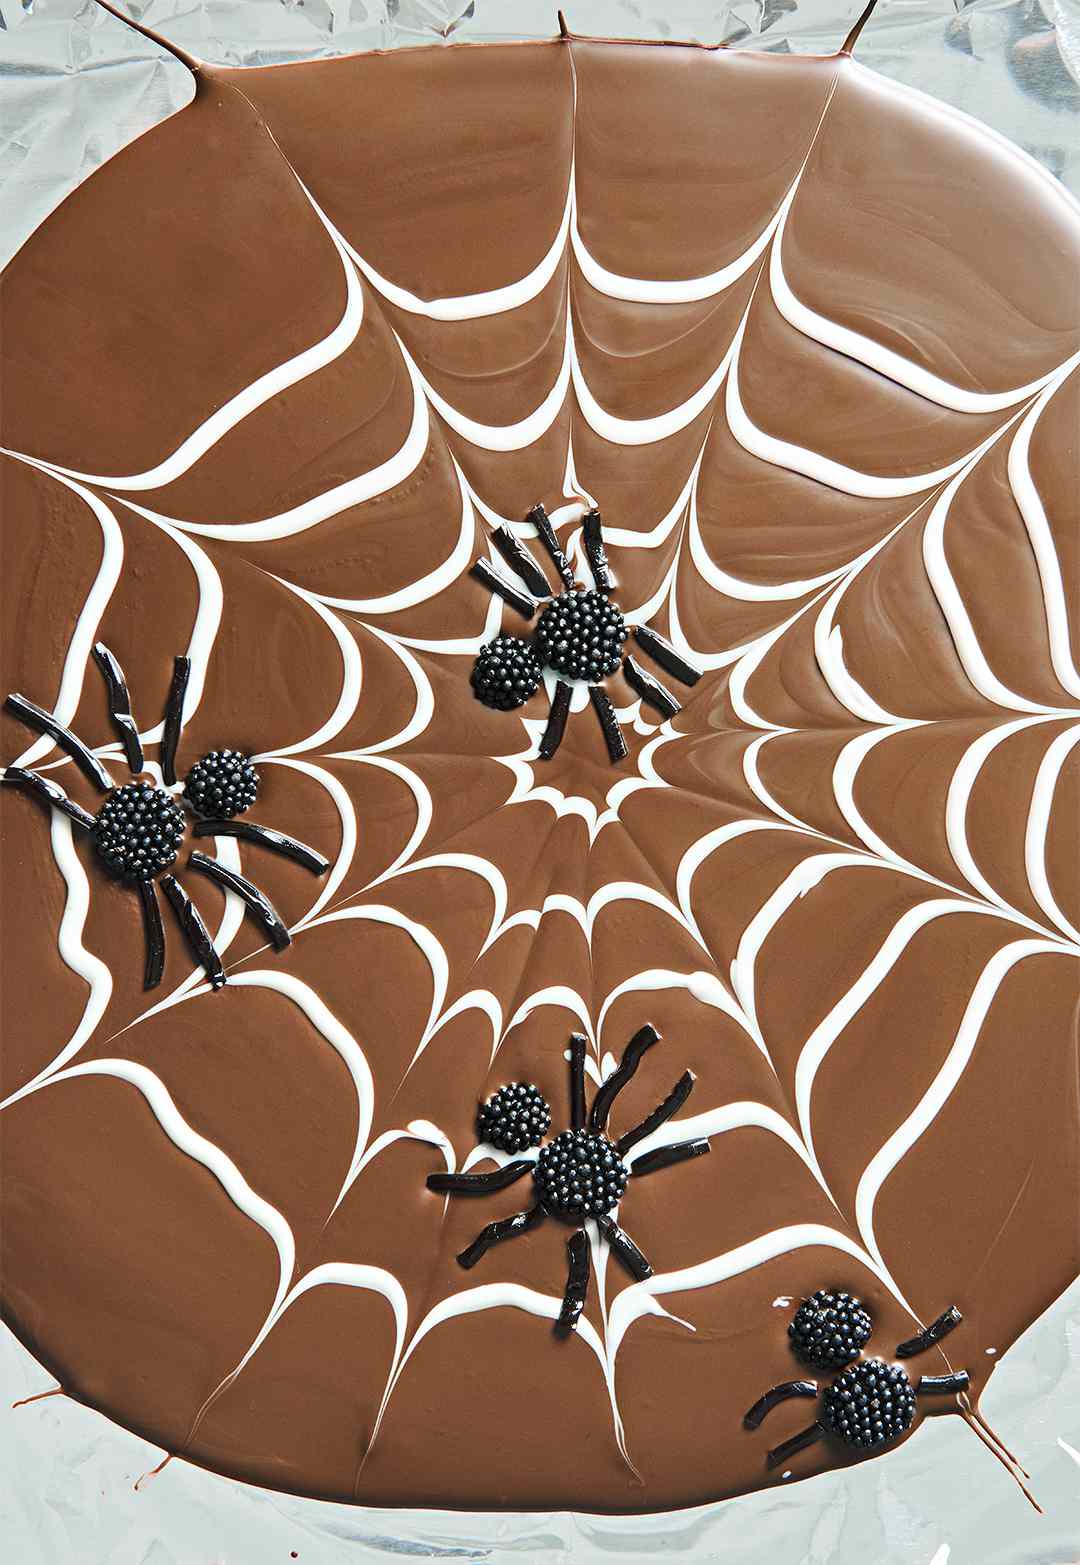 Creepy Cobweb Chocolate Bark with candy spiders